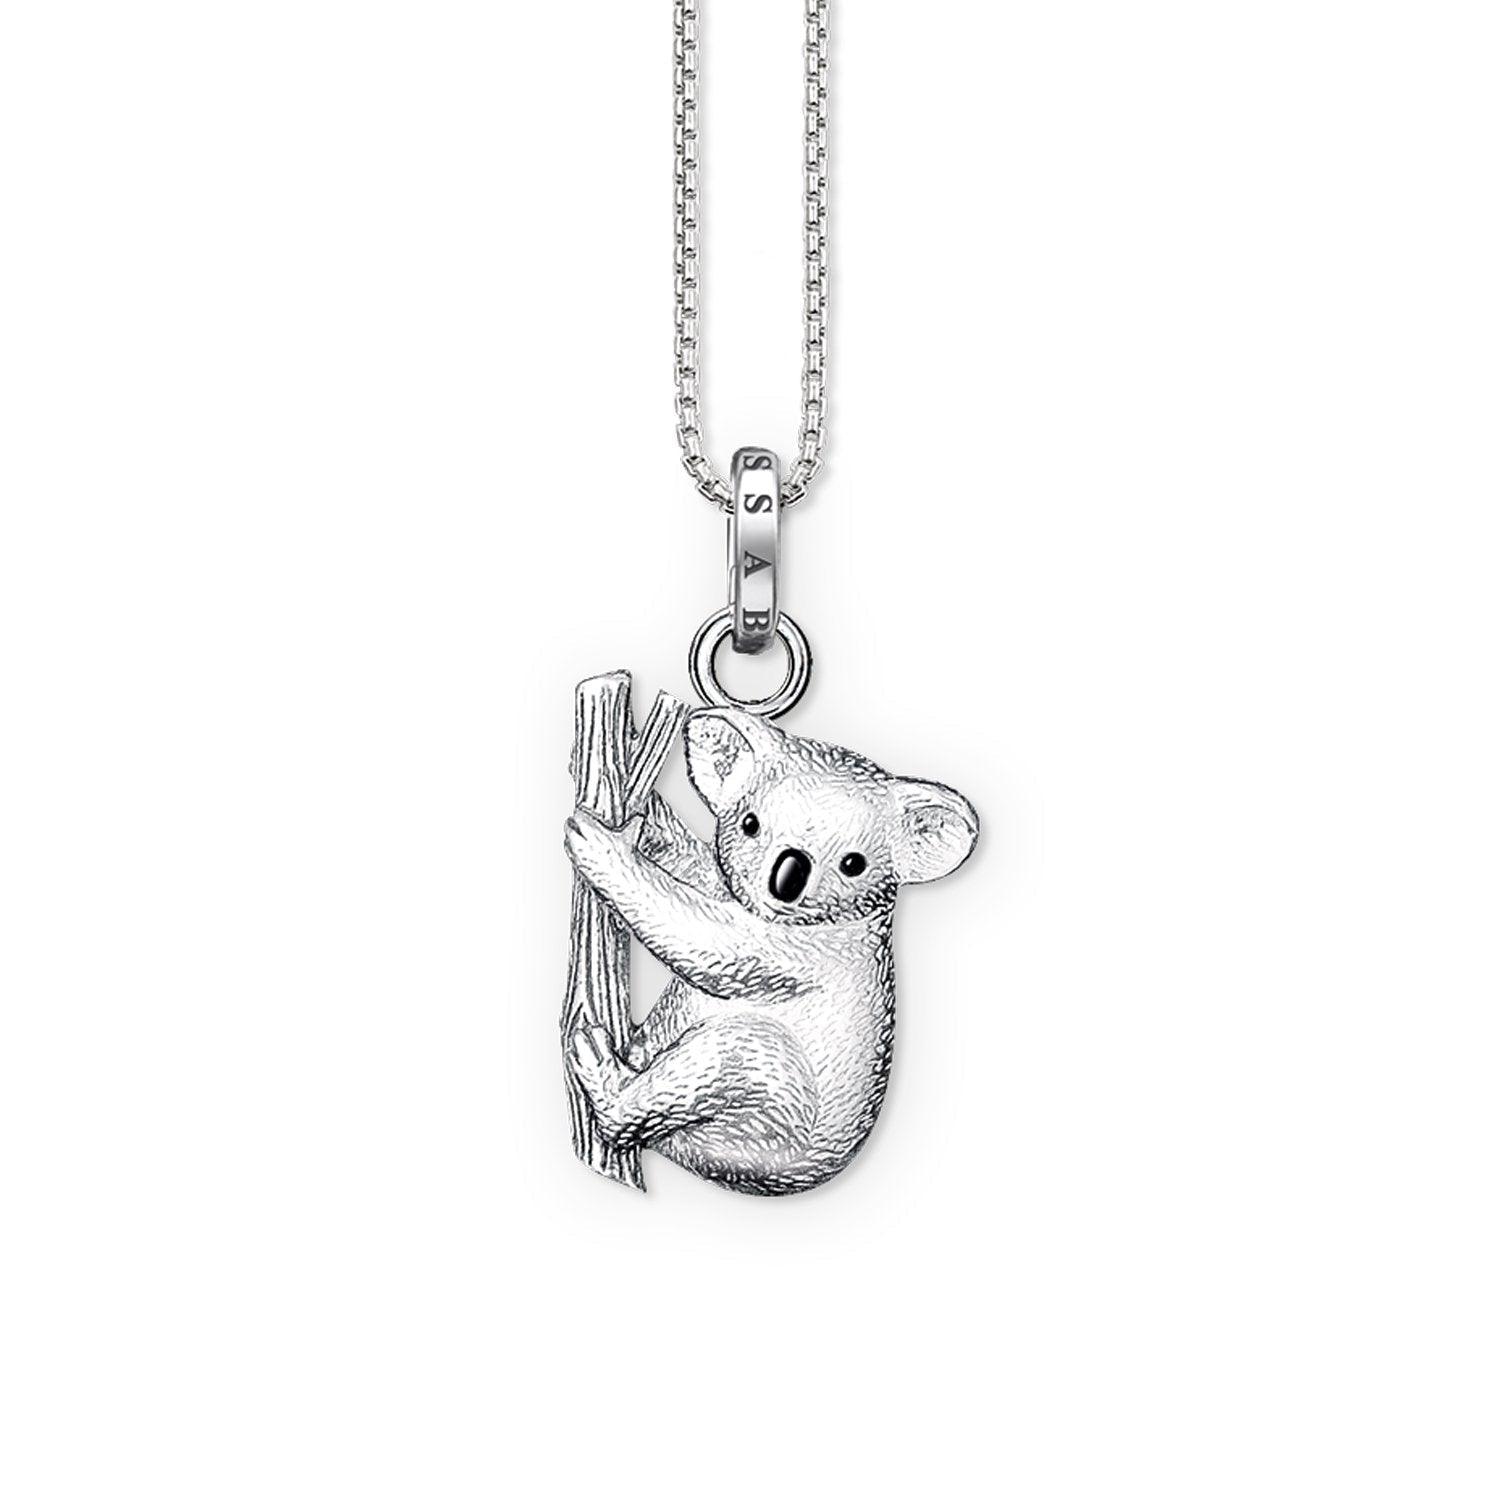 Thomas Sabo Limited Edition "Koala" Necklace Necklaces Thomas Sabo 